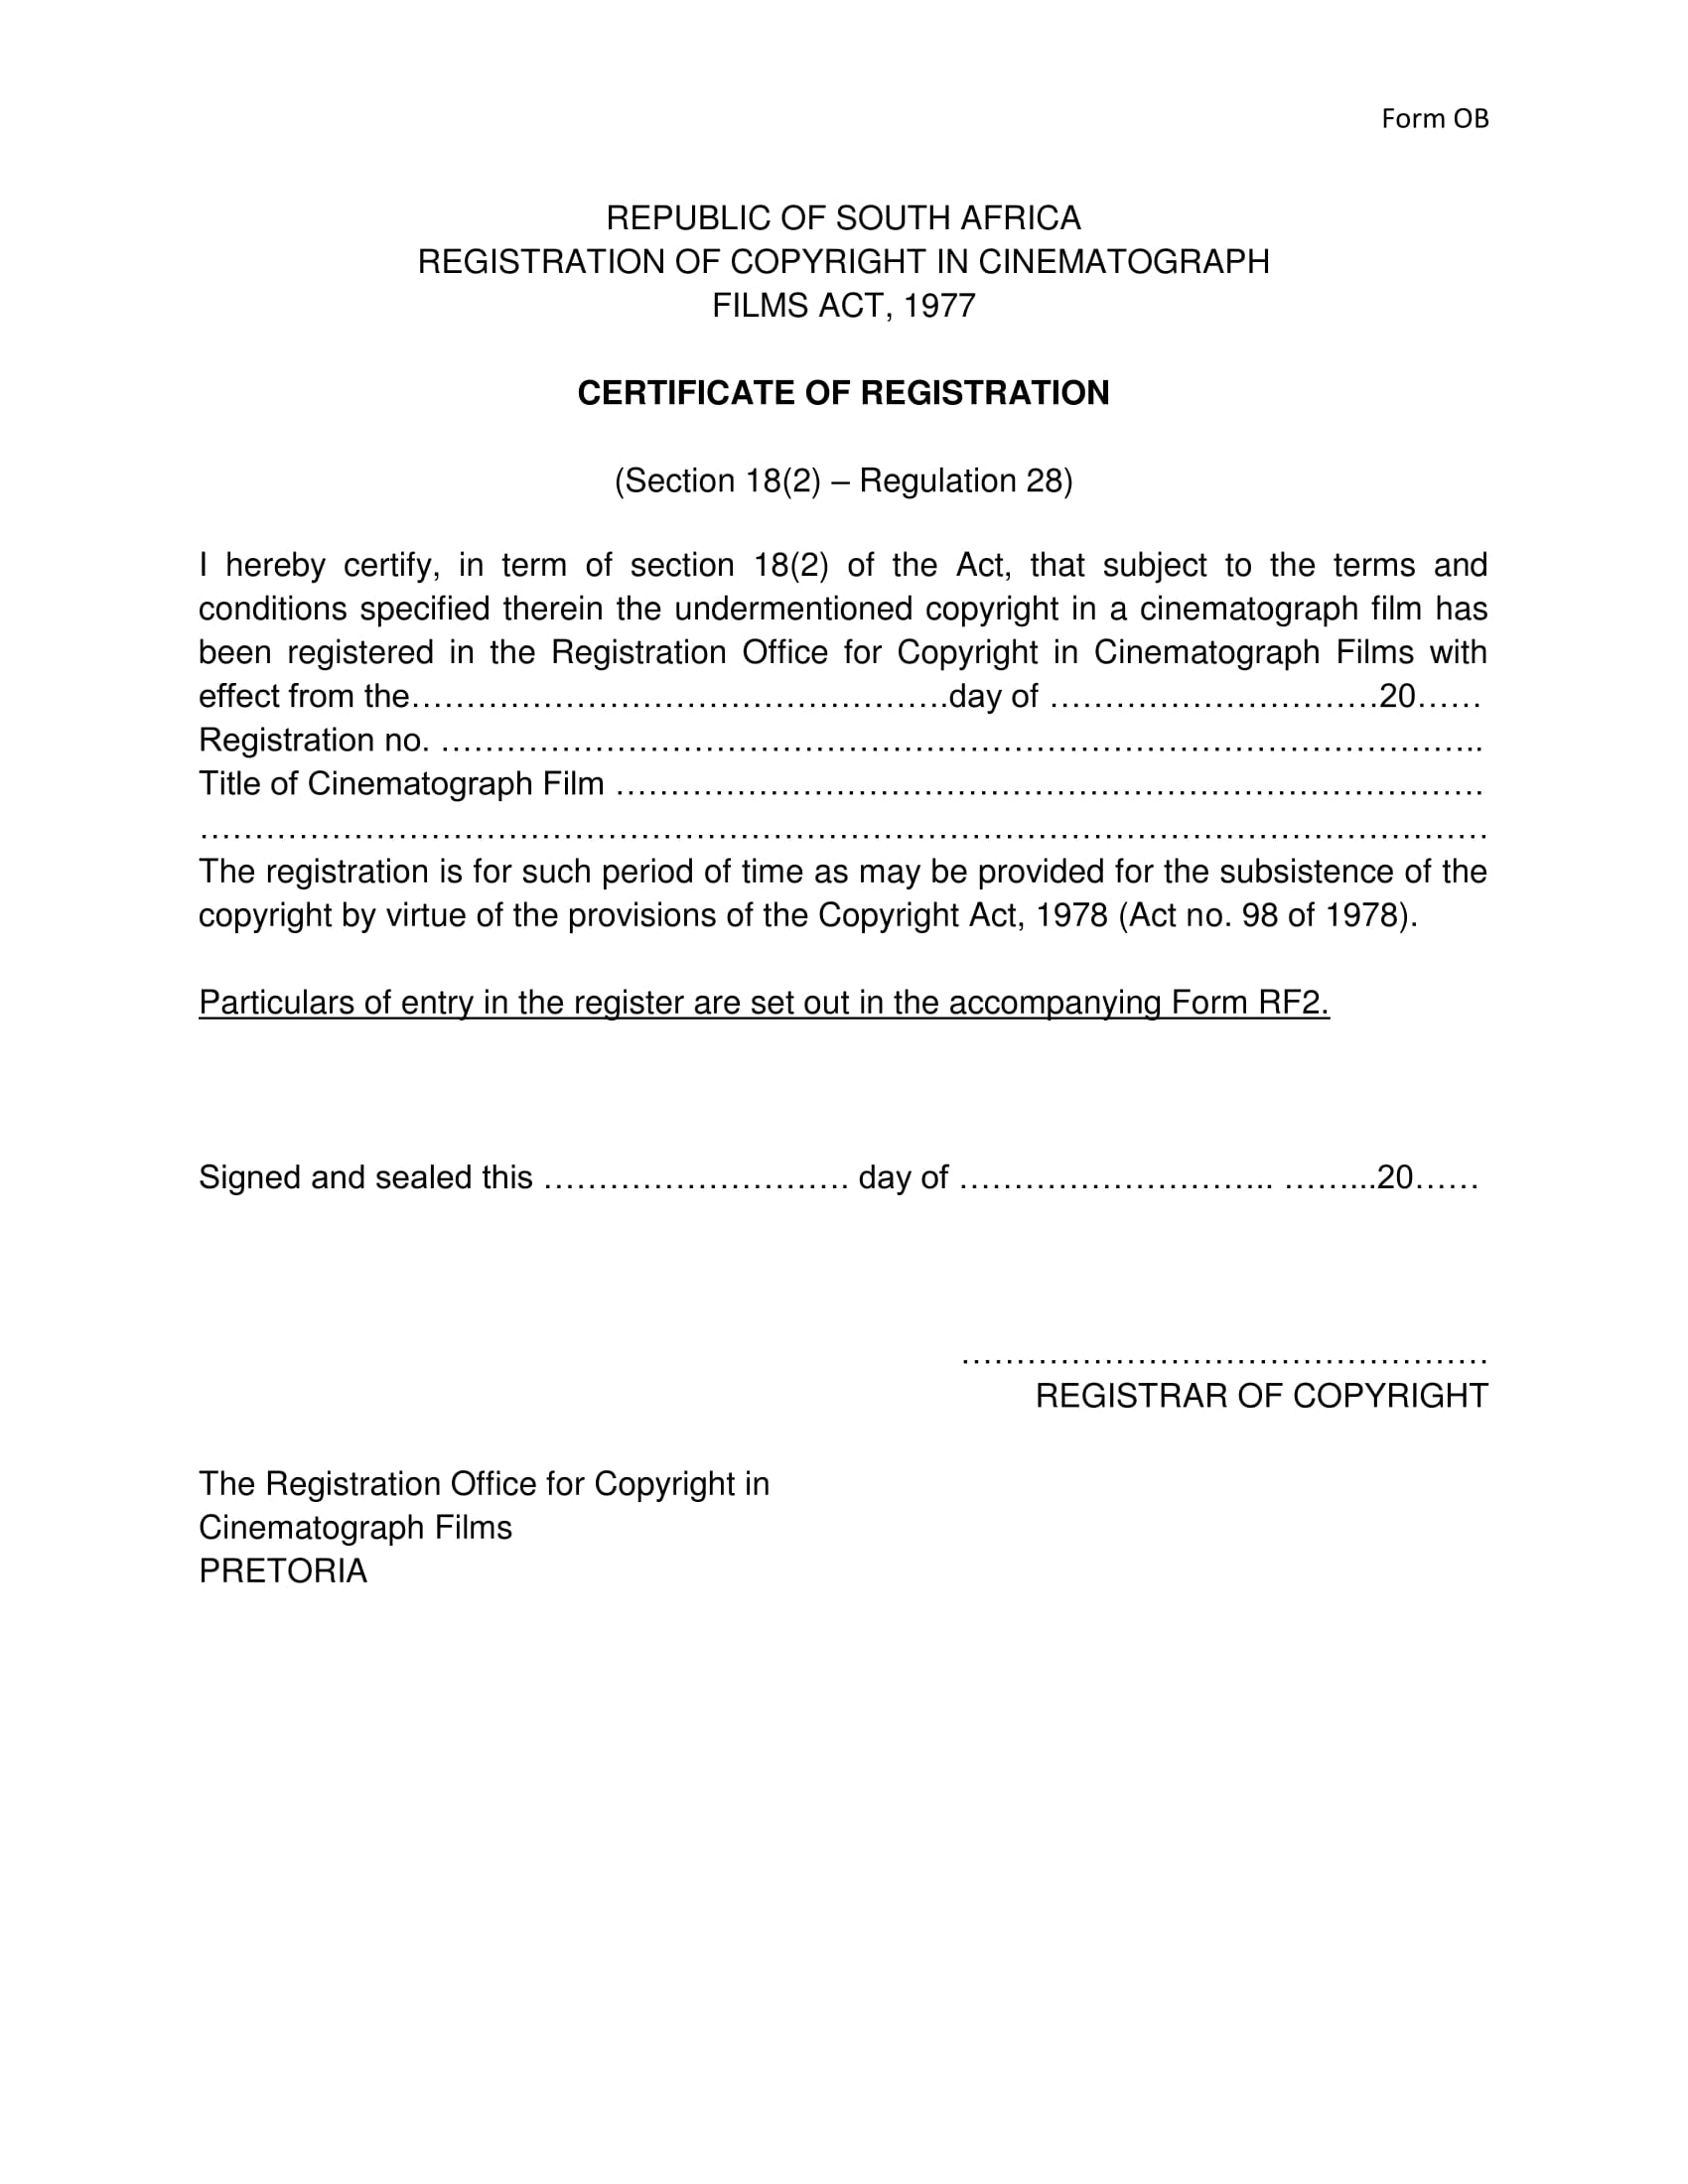 cinematography copyright registration certificate form 1